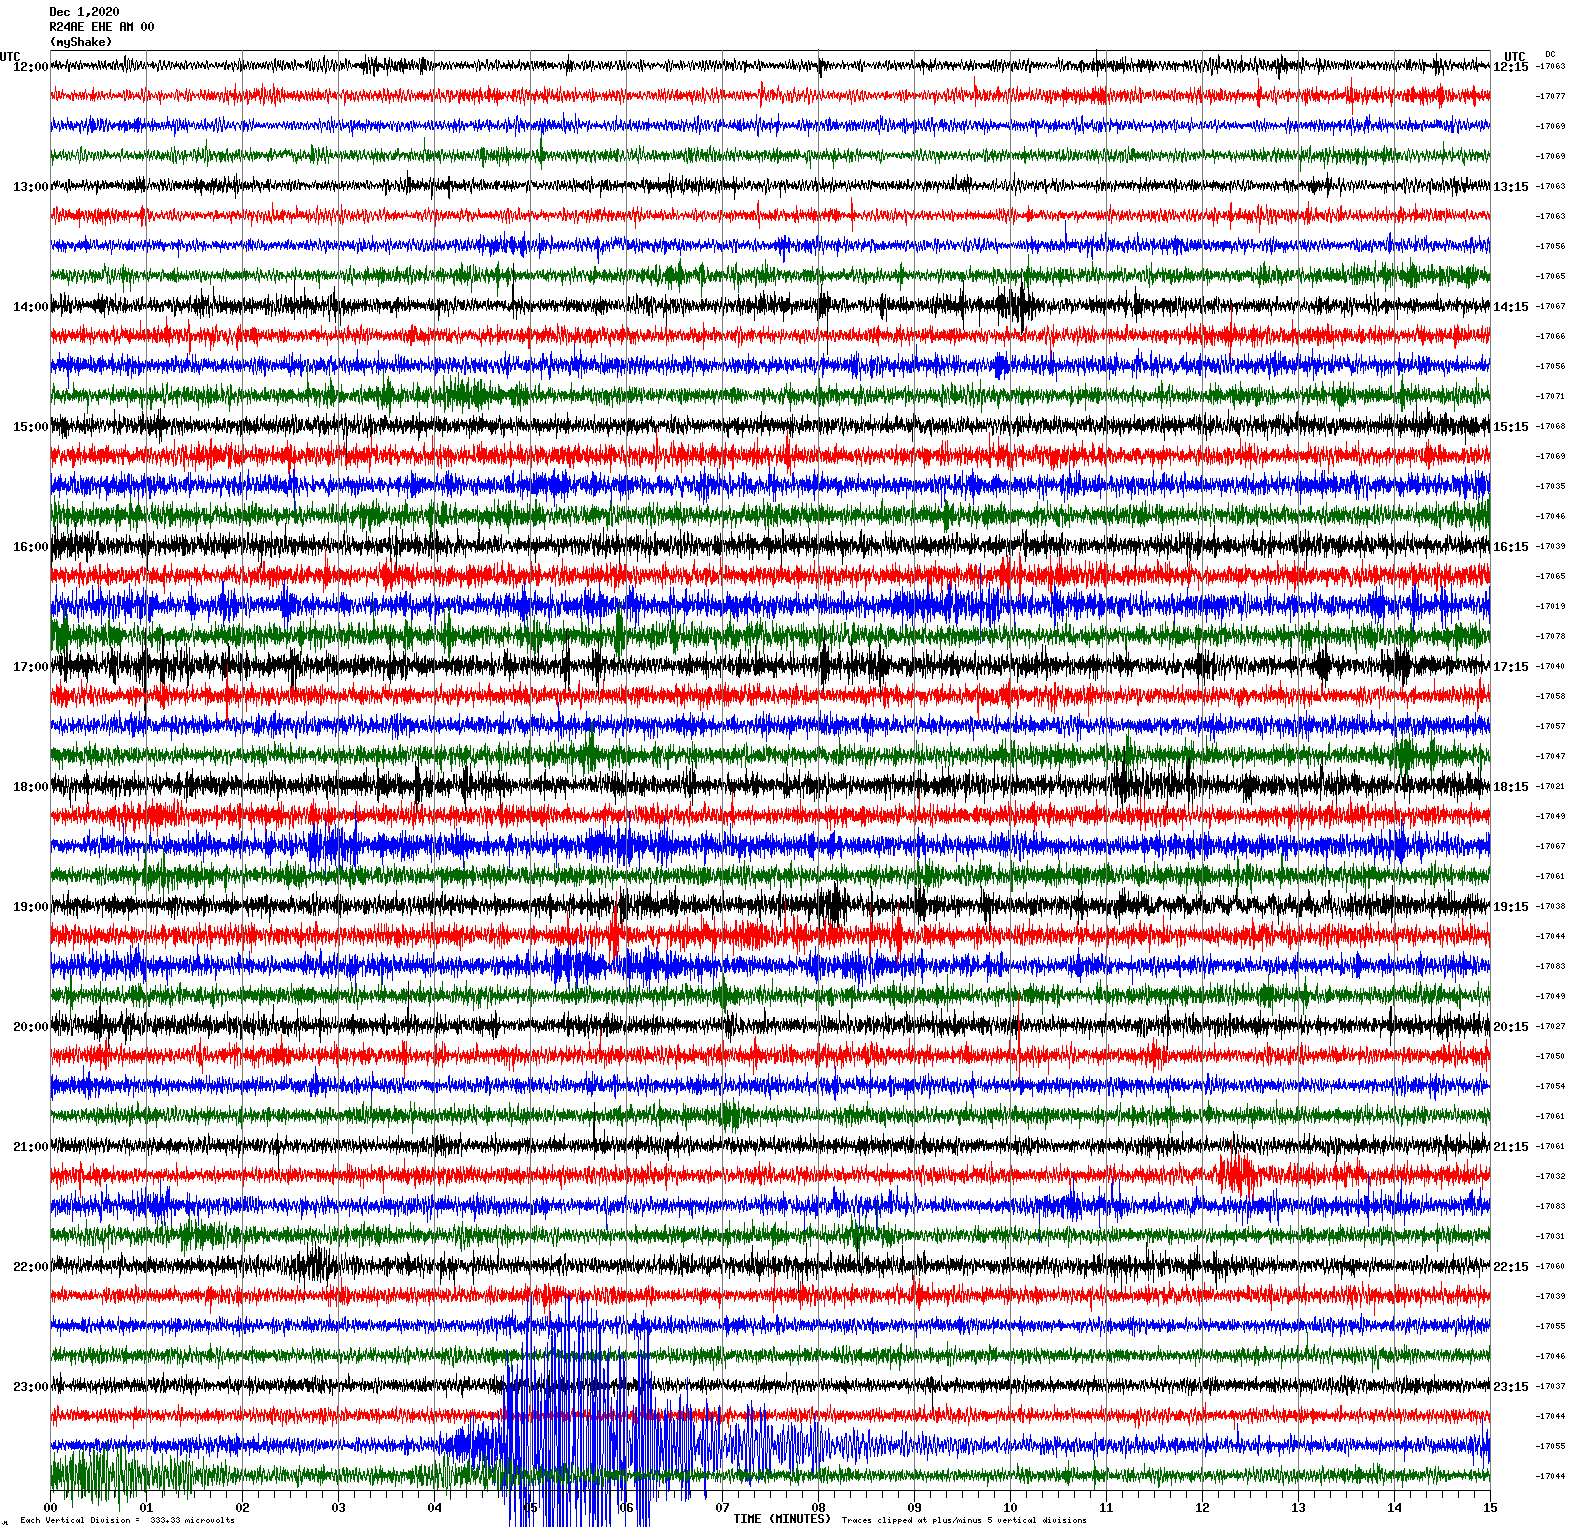 /seismic-data/R24AE/R24AE_EHN_AM_00.2020120112.gif